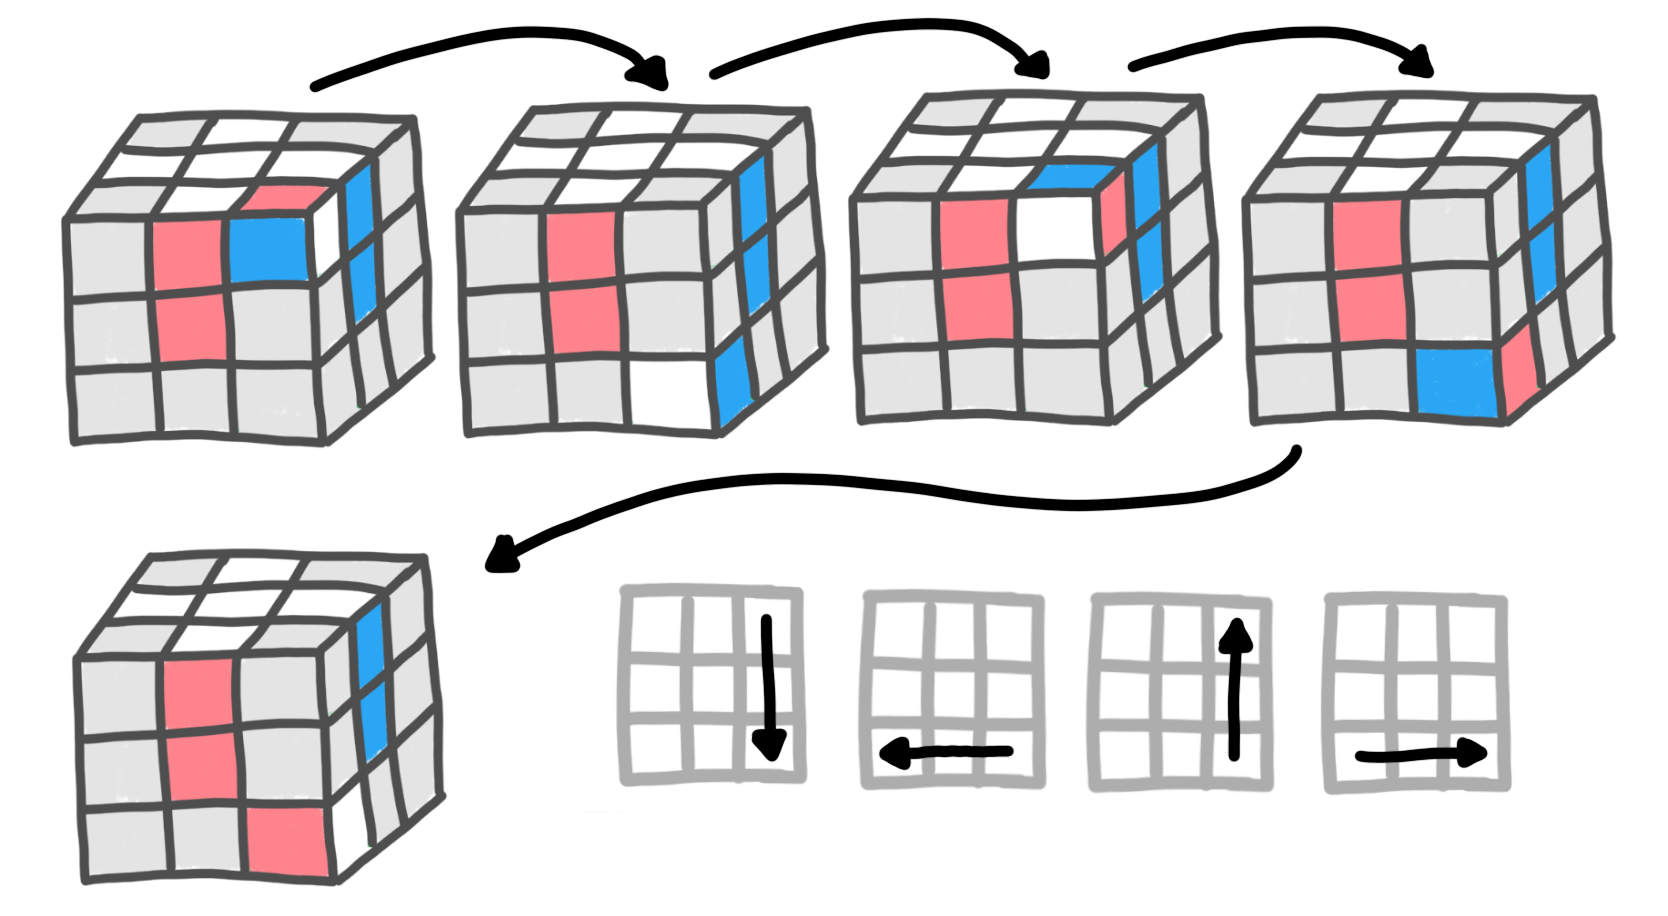 solving a Rubik's Cube slowly Watson